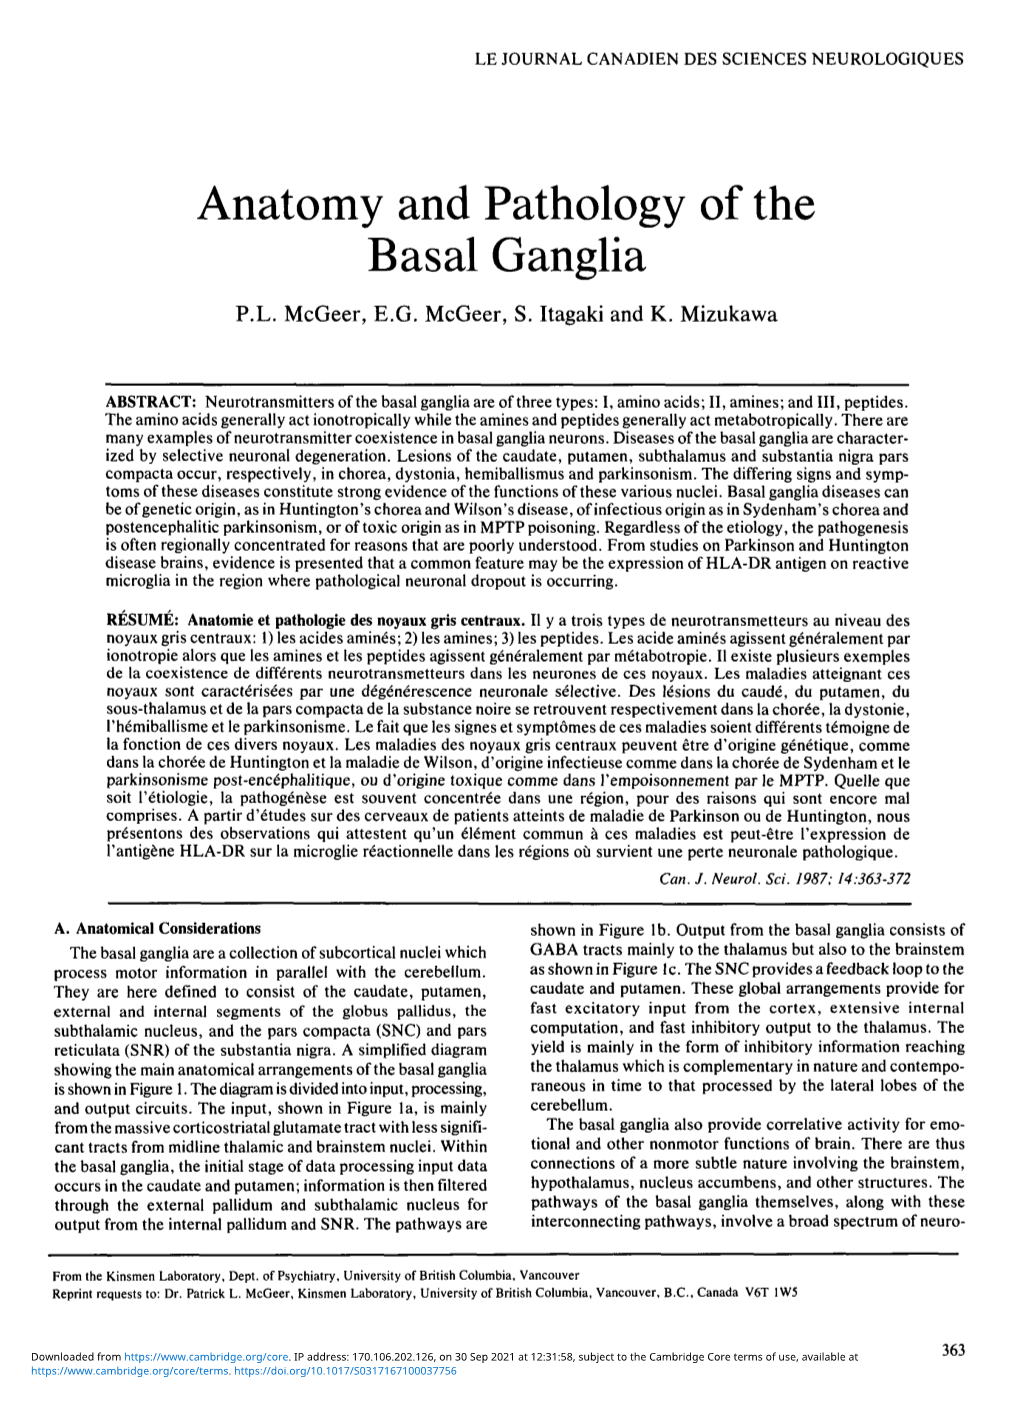 Anatomy and Pathology of the Basal Ganglia P.L